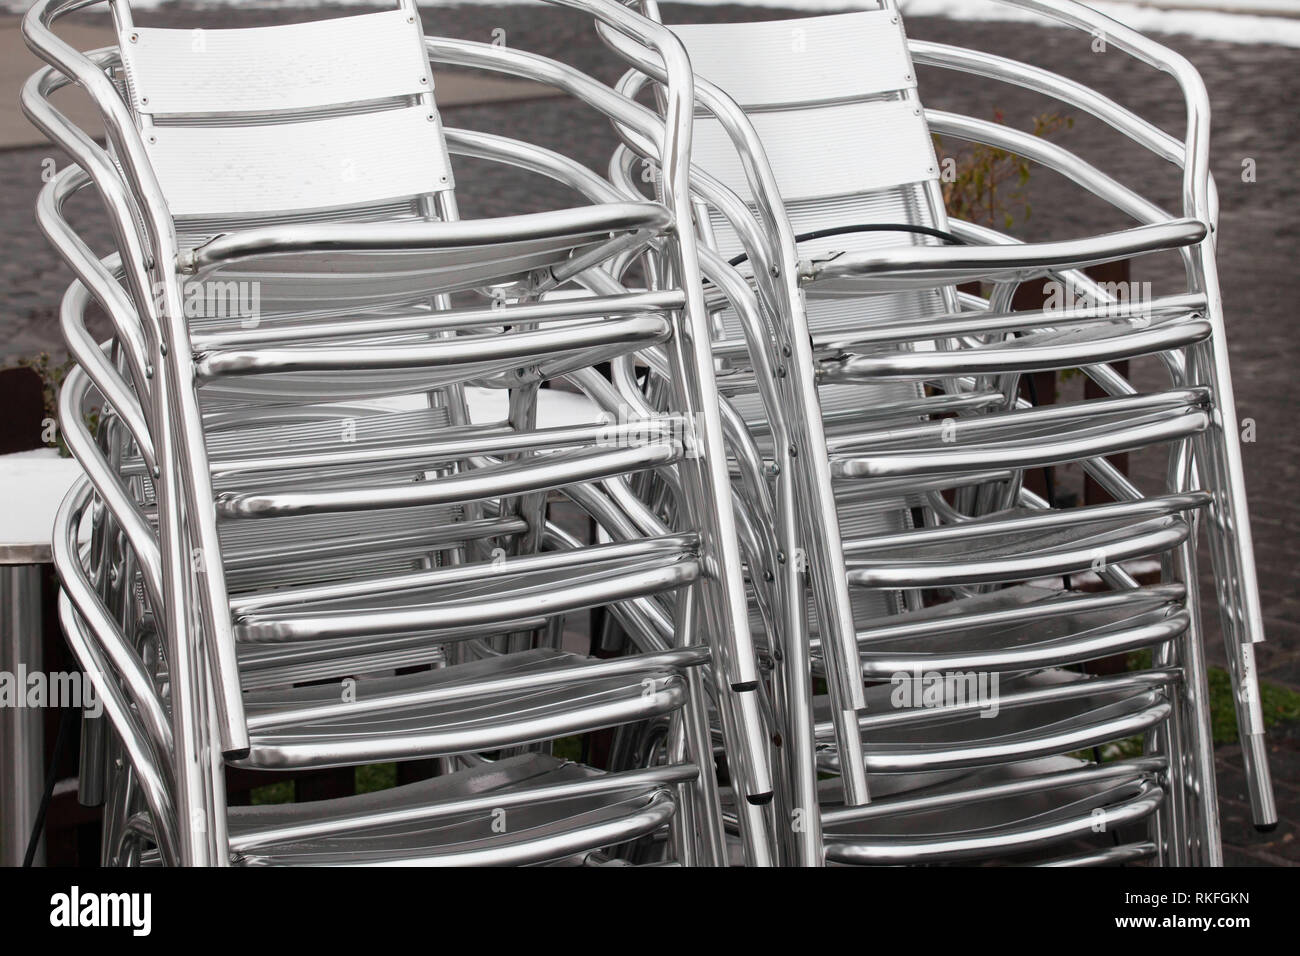 stacked aluminium garden chairs in the Rheinau harbor, Cologne, Germany.  gestapelte Aluminium-Gartenstuehle im Rheinauhafen, Koeln, Deutschland. Stock Photo